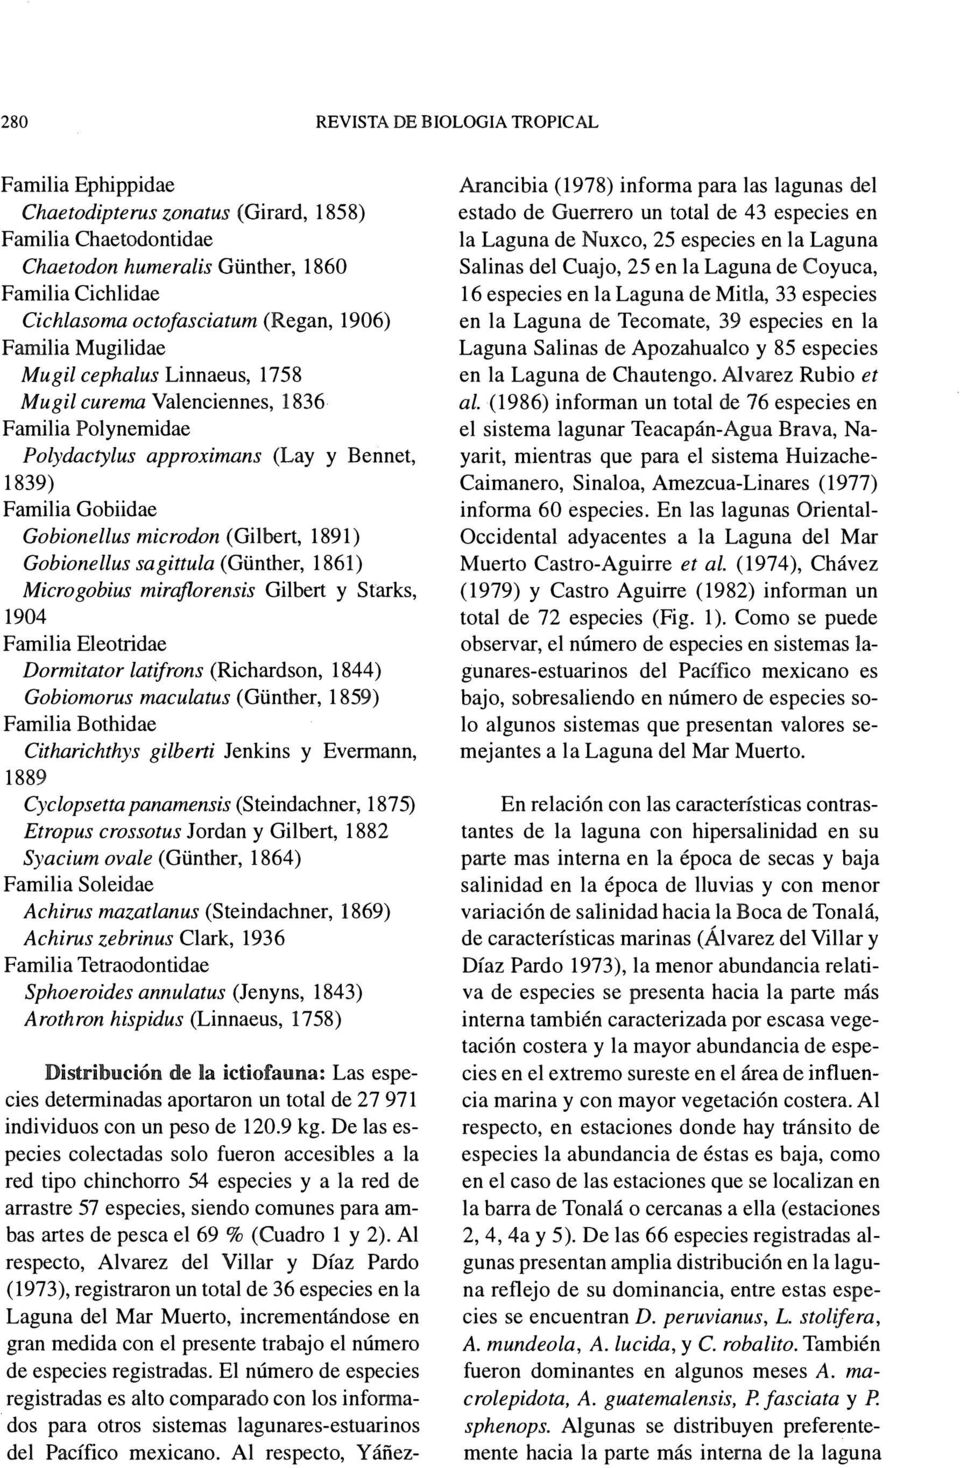 1891) Gobionellus sagittula (Günther, 1861) Microgobius miraflorensis Gilbert y Starks, 1904 Familia Eleotridae Dormitator latifrons (Richardson, 1844) Gobiomorus maculatus (Günther, 1859) Familia